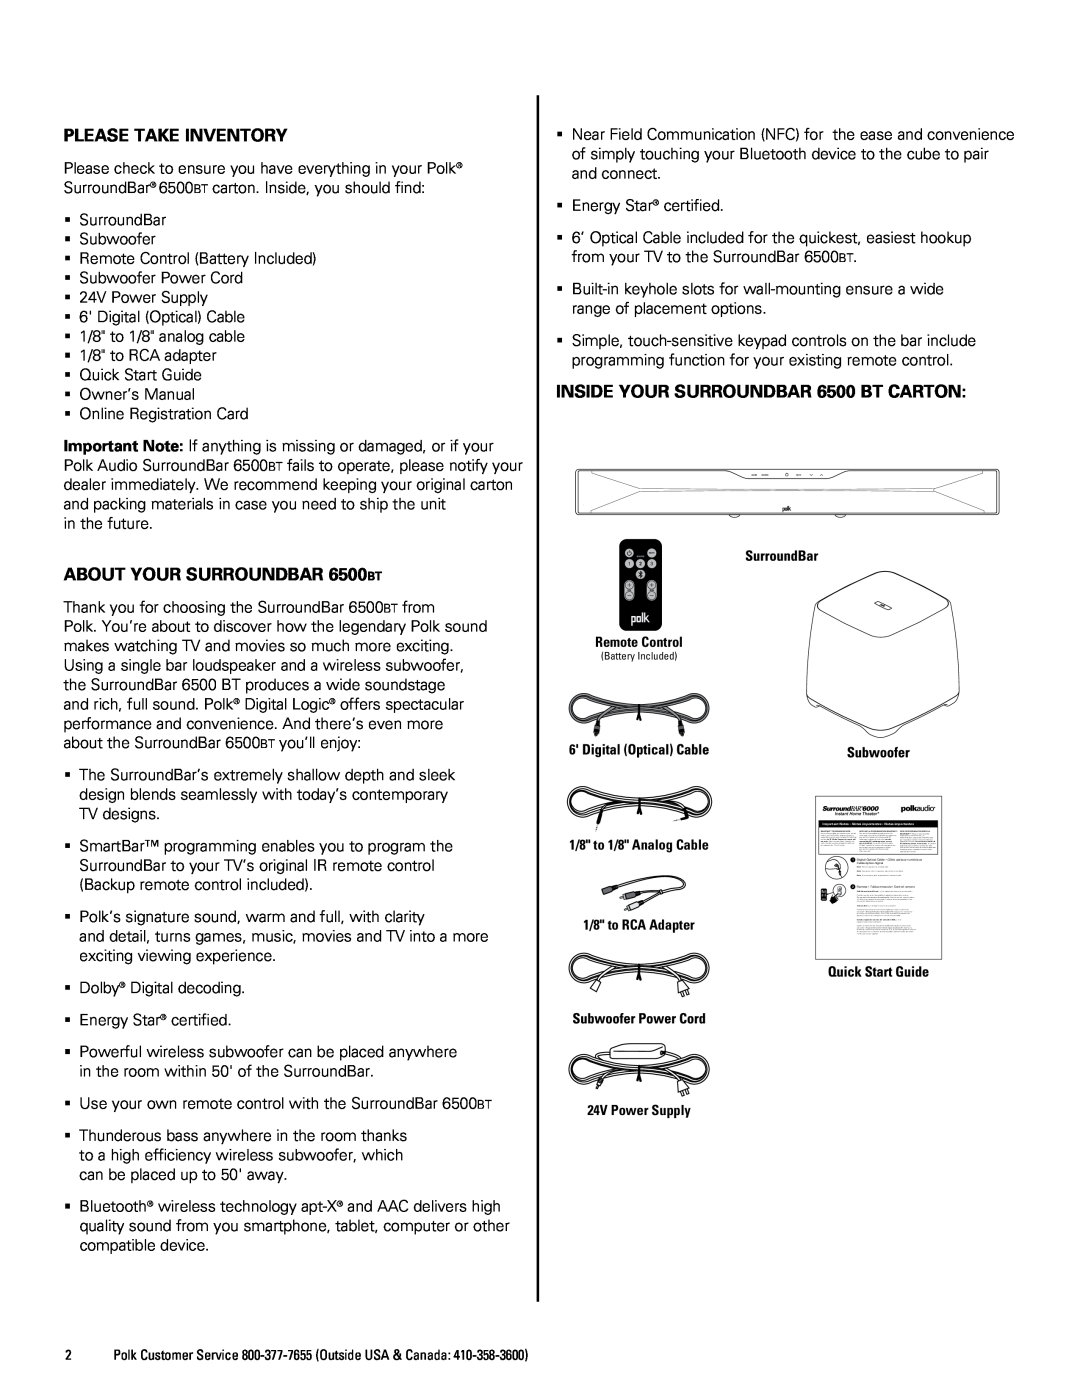 Polk Audio 6500BT manual Please Take Inventory, About your SurroundBar 6500bt, Inside Your SurroundBar 6500 BT Carton 